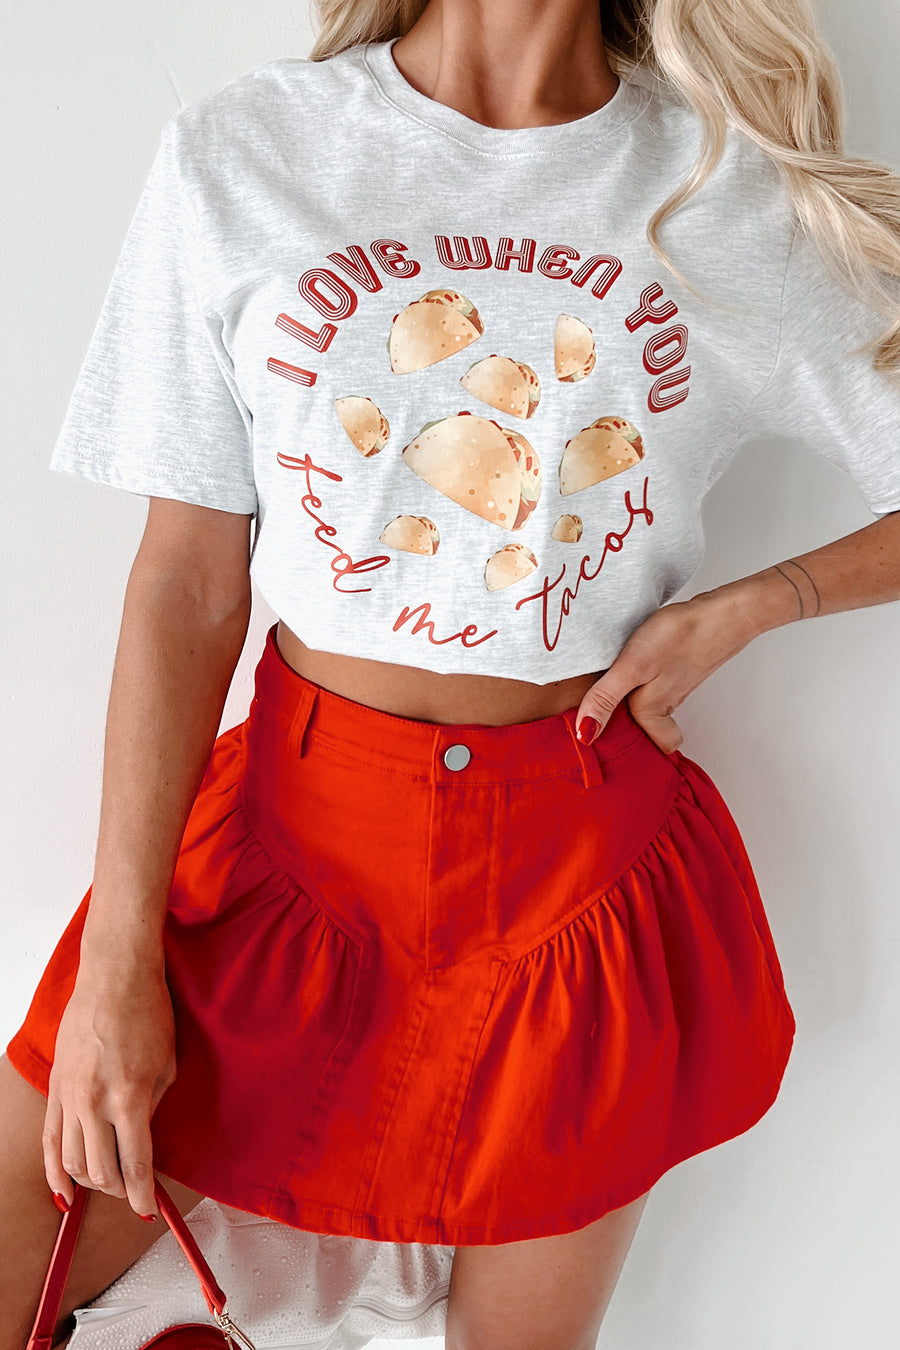 "I Love When You Feed Me Tacos" Graphic - Multiple Shirt Options (Ash Grey) - Print On Demand - NanaMacs